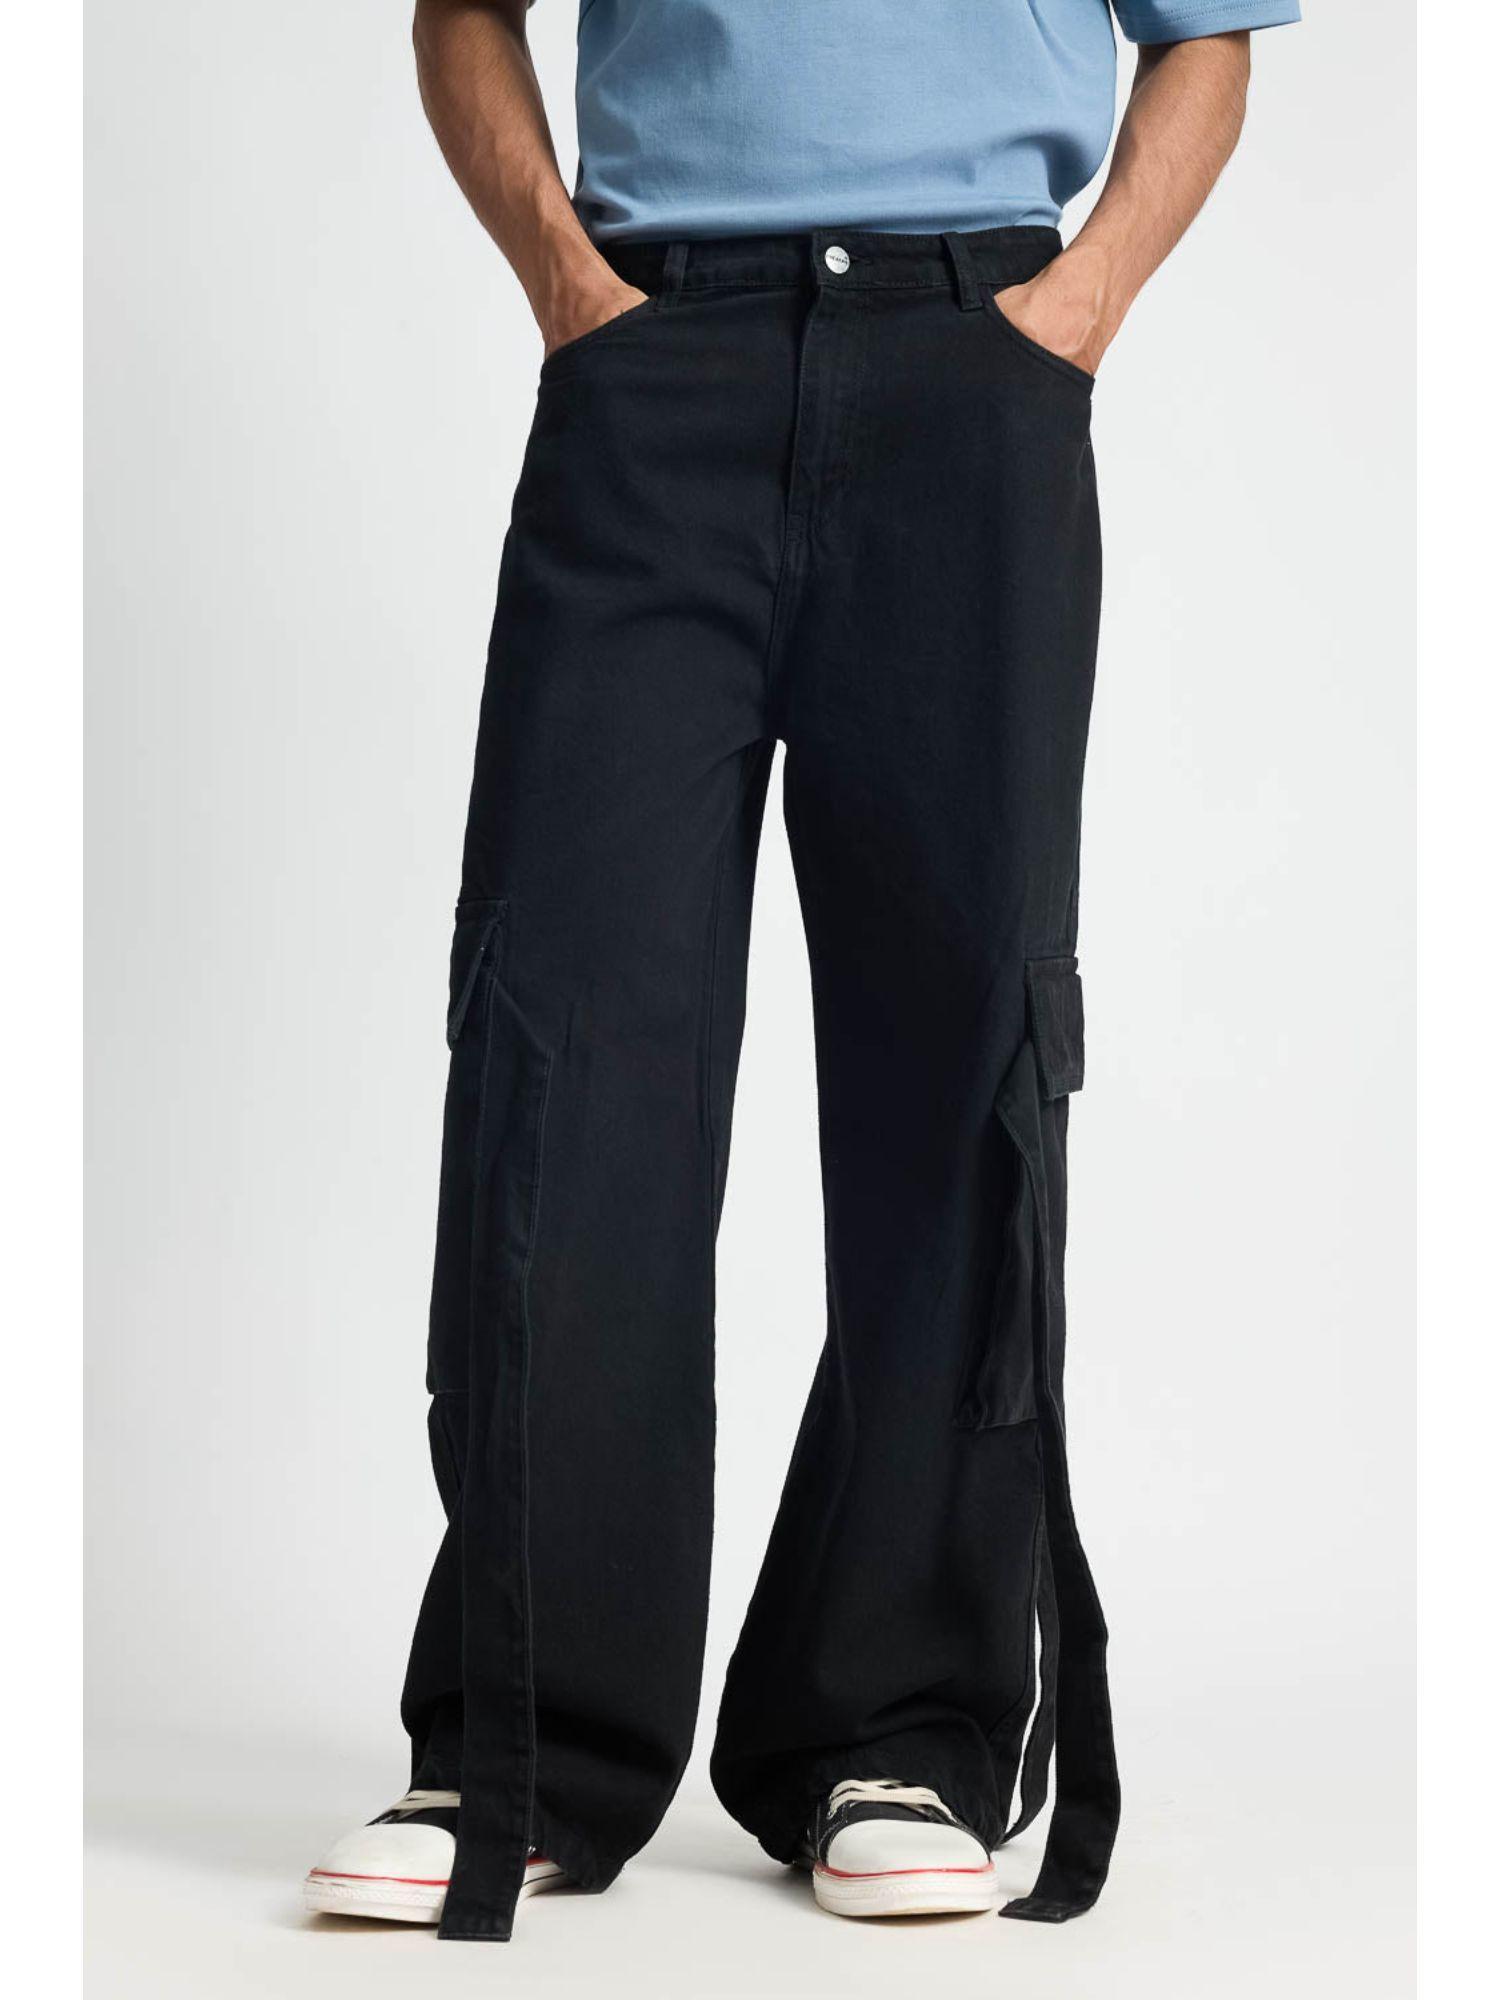 black workwear men's cargo pants